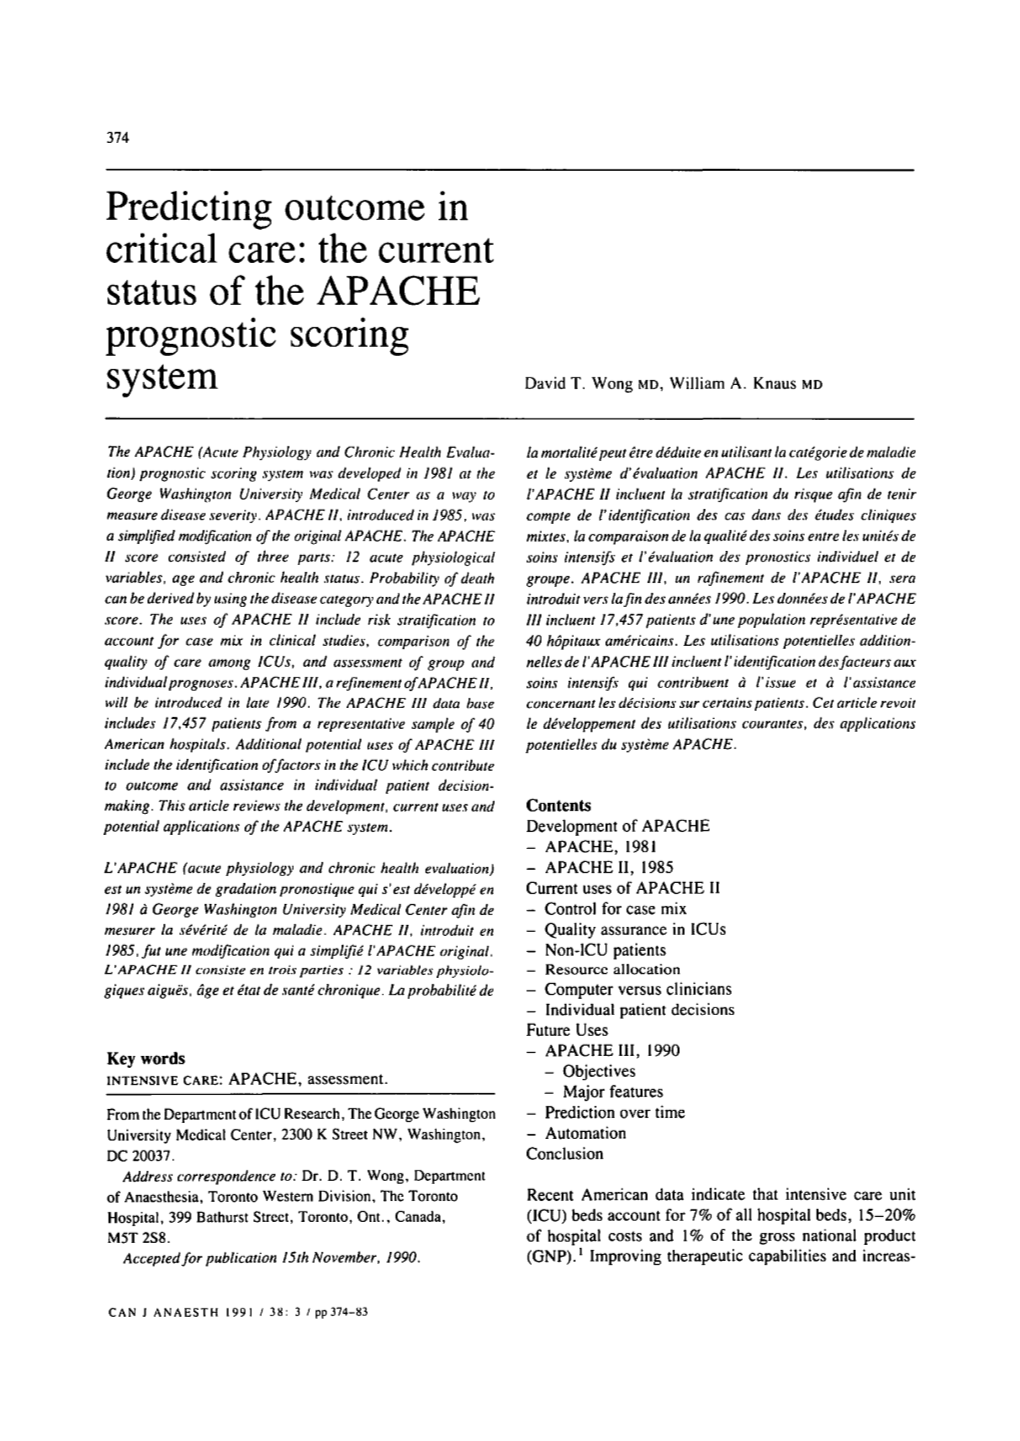 Predicting Outcome in Critical Care: the Current Status of the APACHE Prognostic Scoring System David T